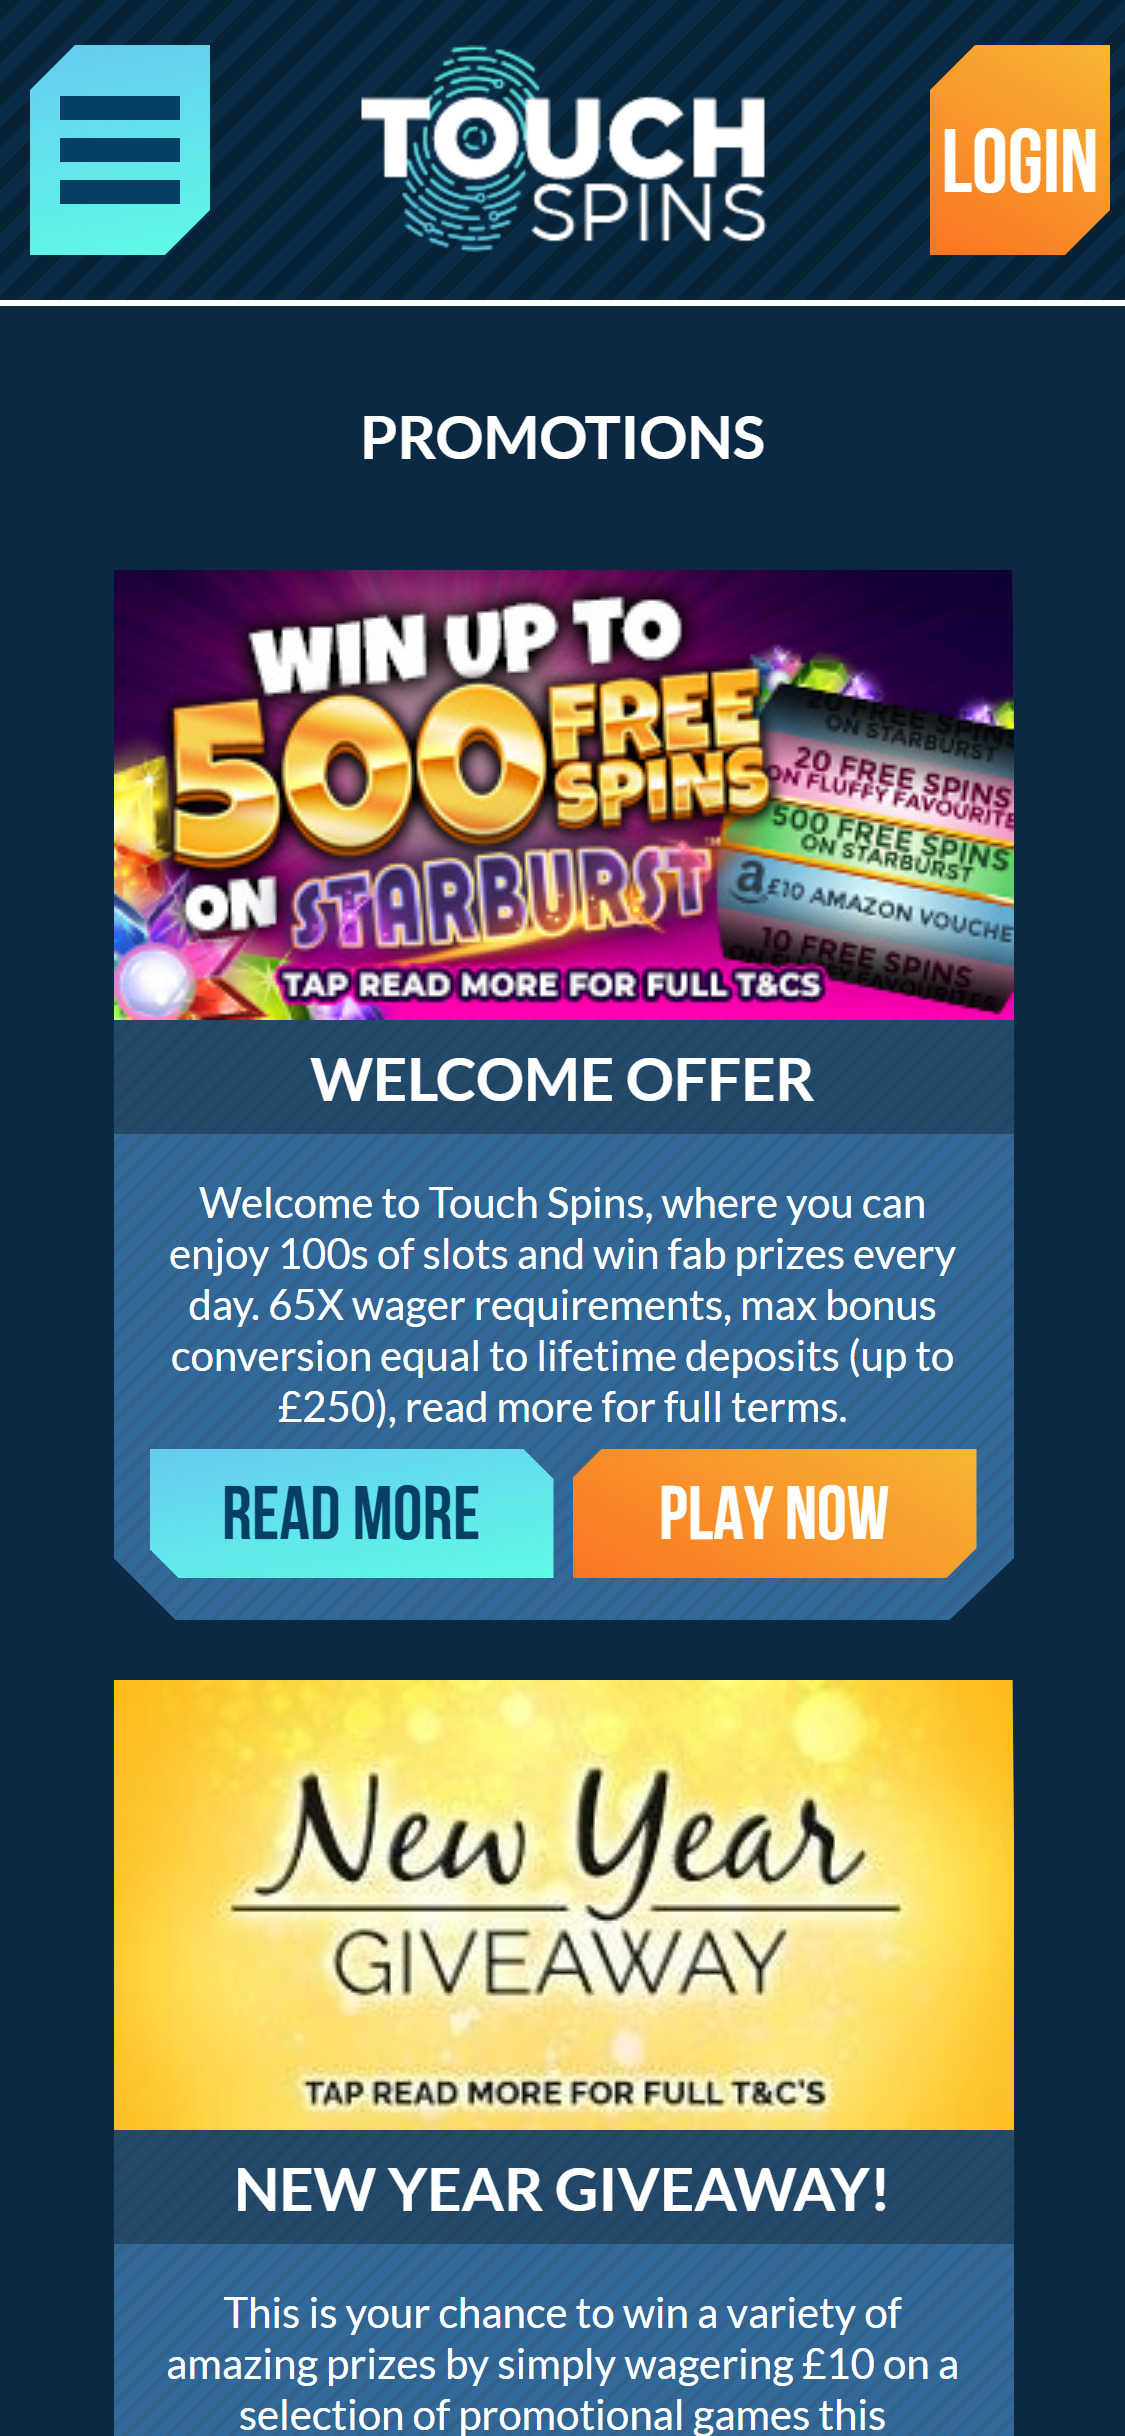 Touch Spins Casino Mobile No Deposit Bonus Review